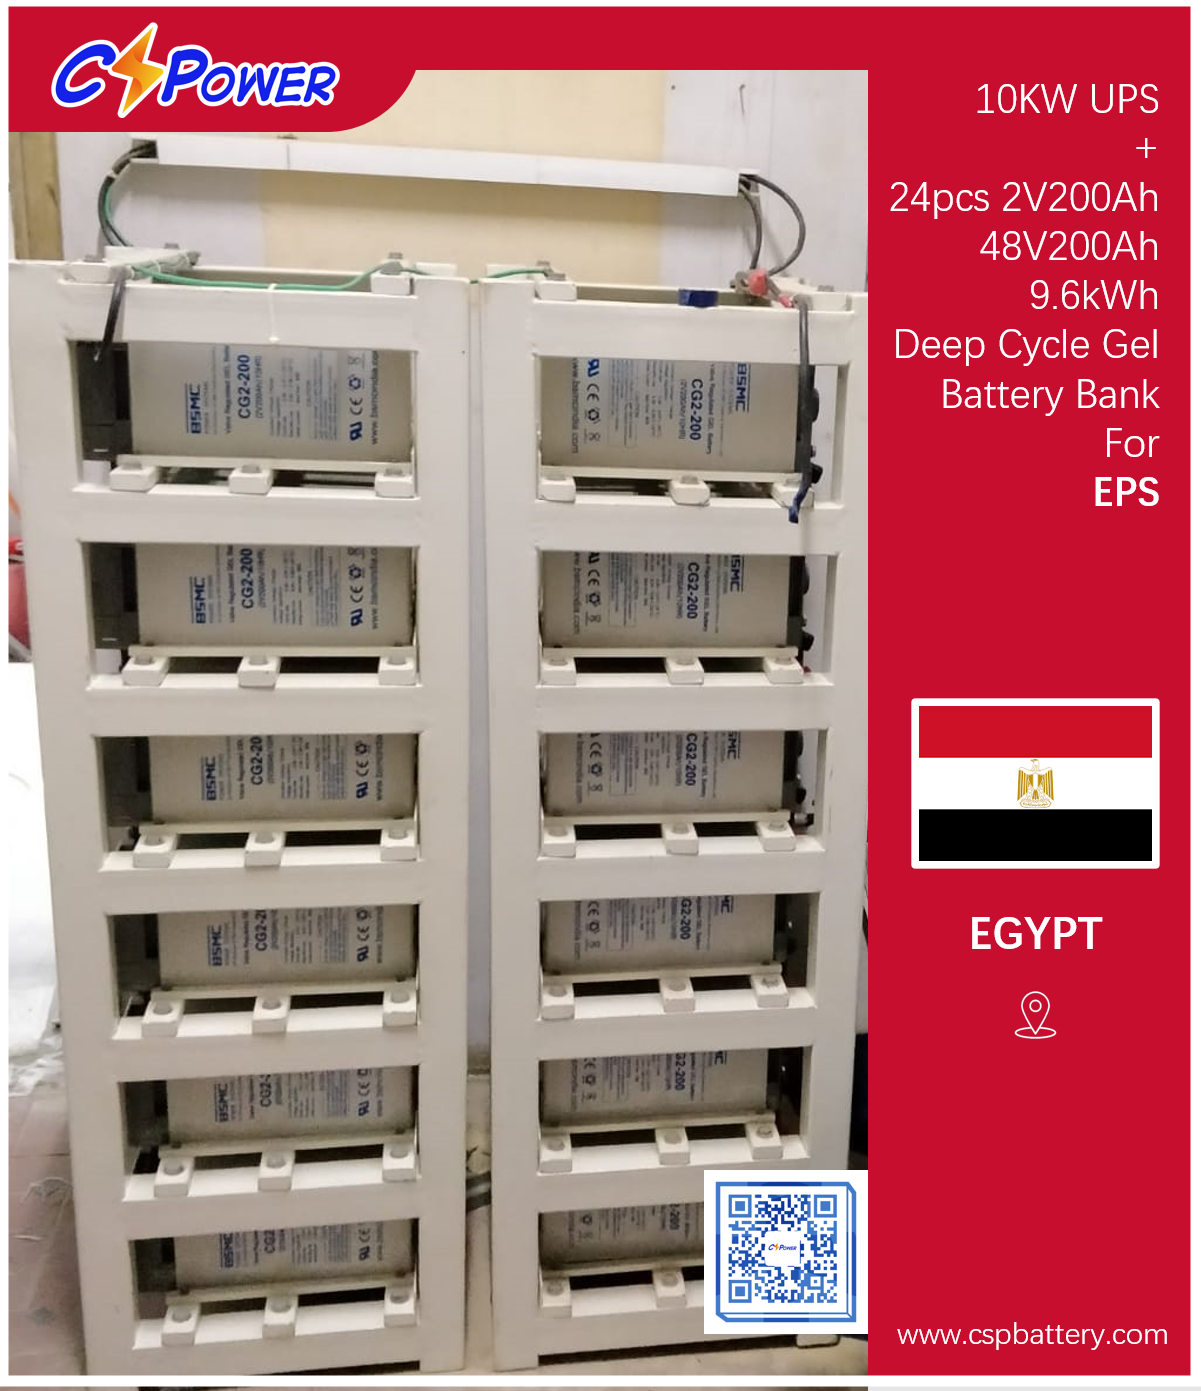 CSPower-batteriprosjekt: 24 STK 2V 200AH Deep Cycle Solar Gel-batteri for EPS